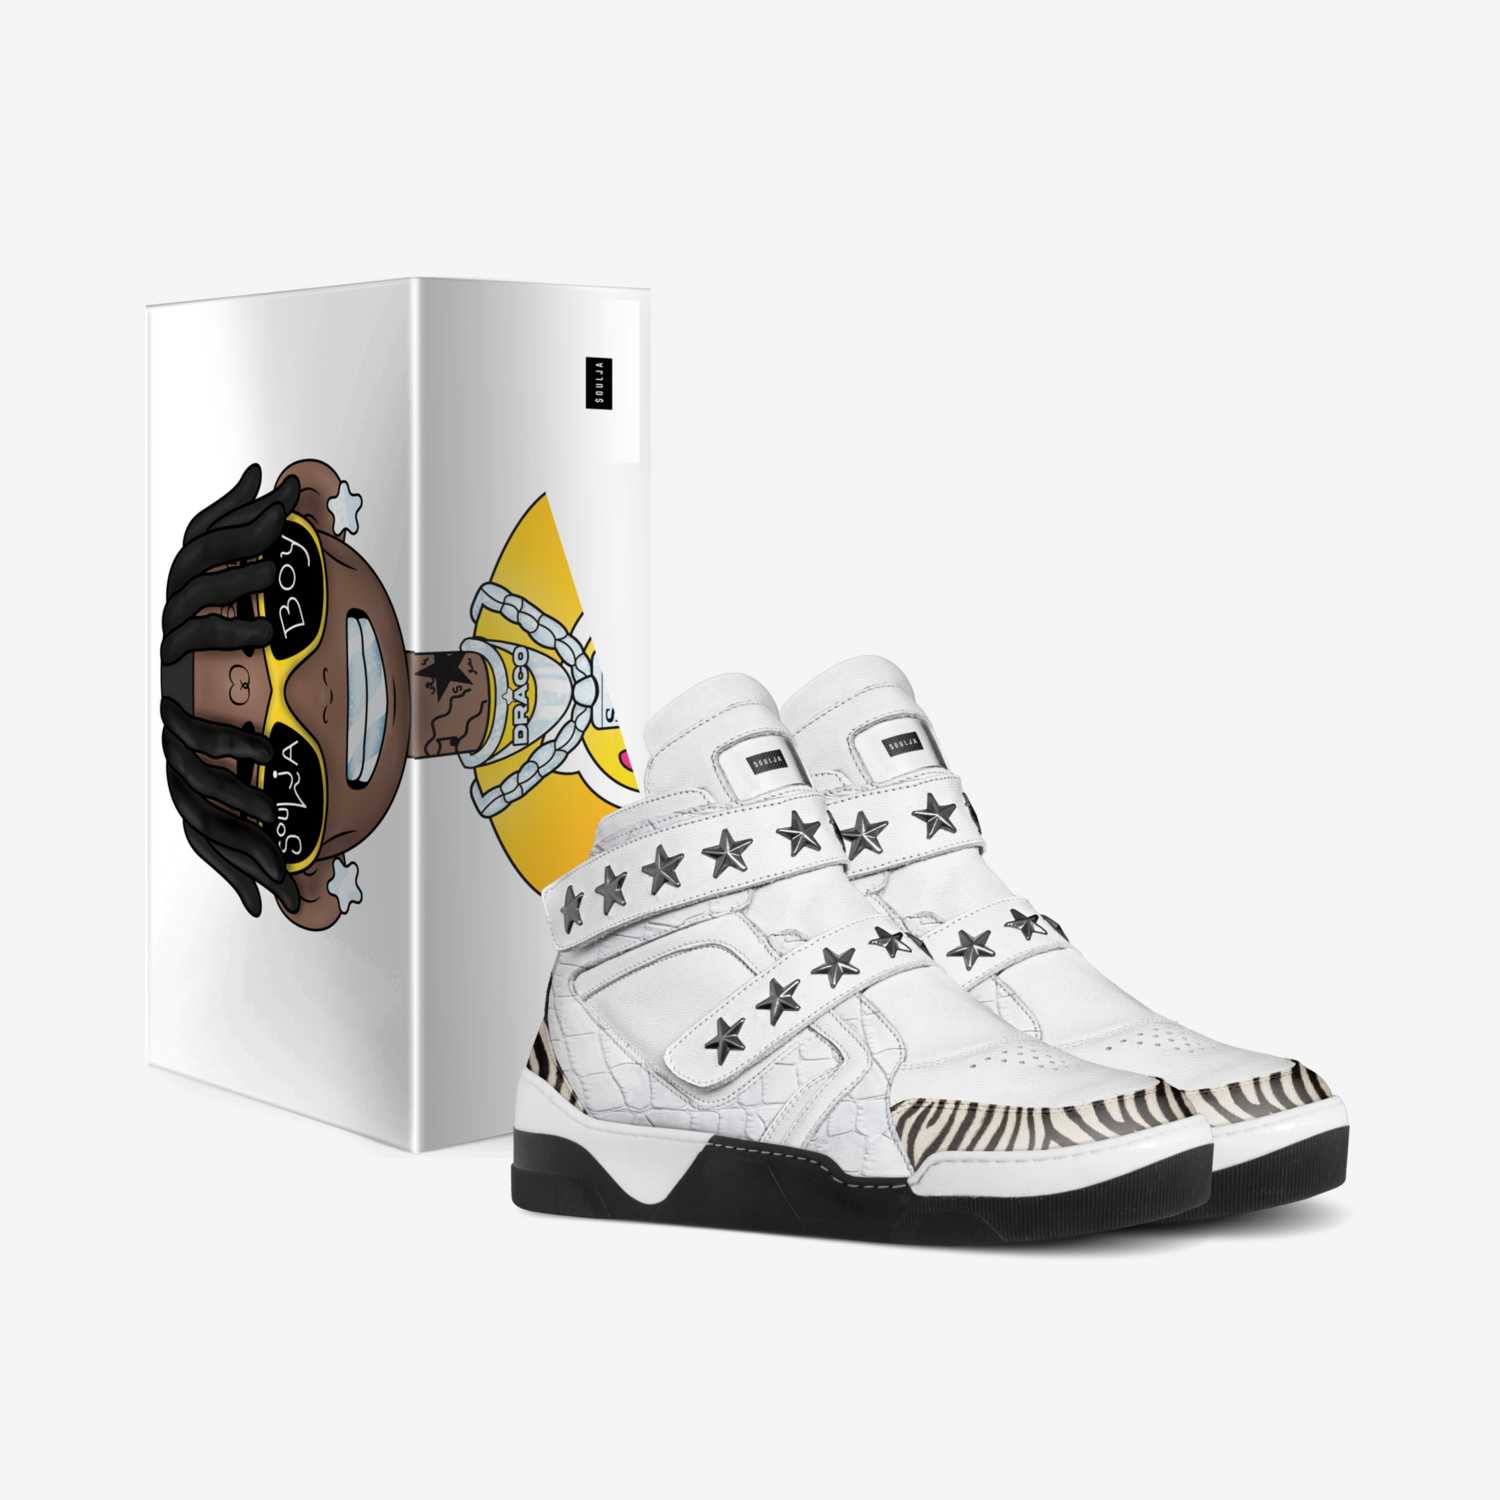 Soulja Stars  custom made in Italy shoes by Soulja Boy | Box view